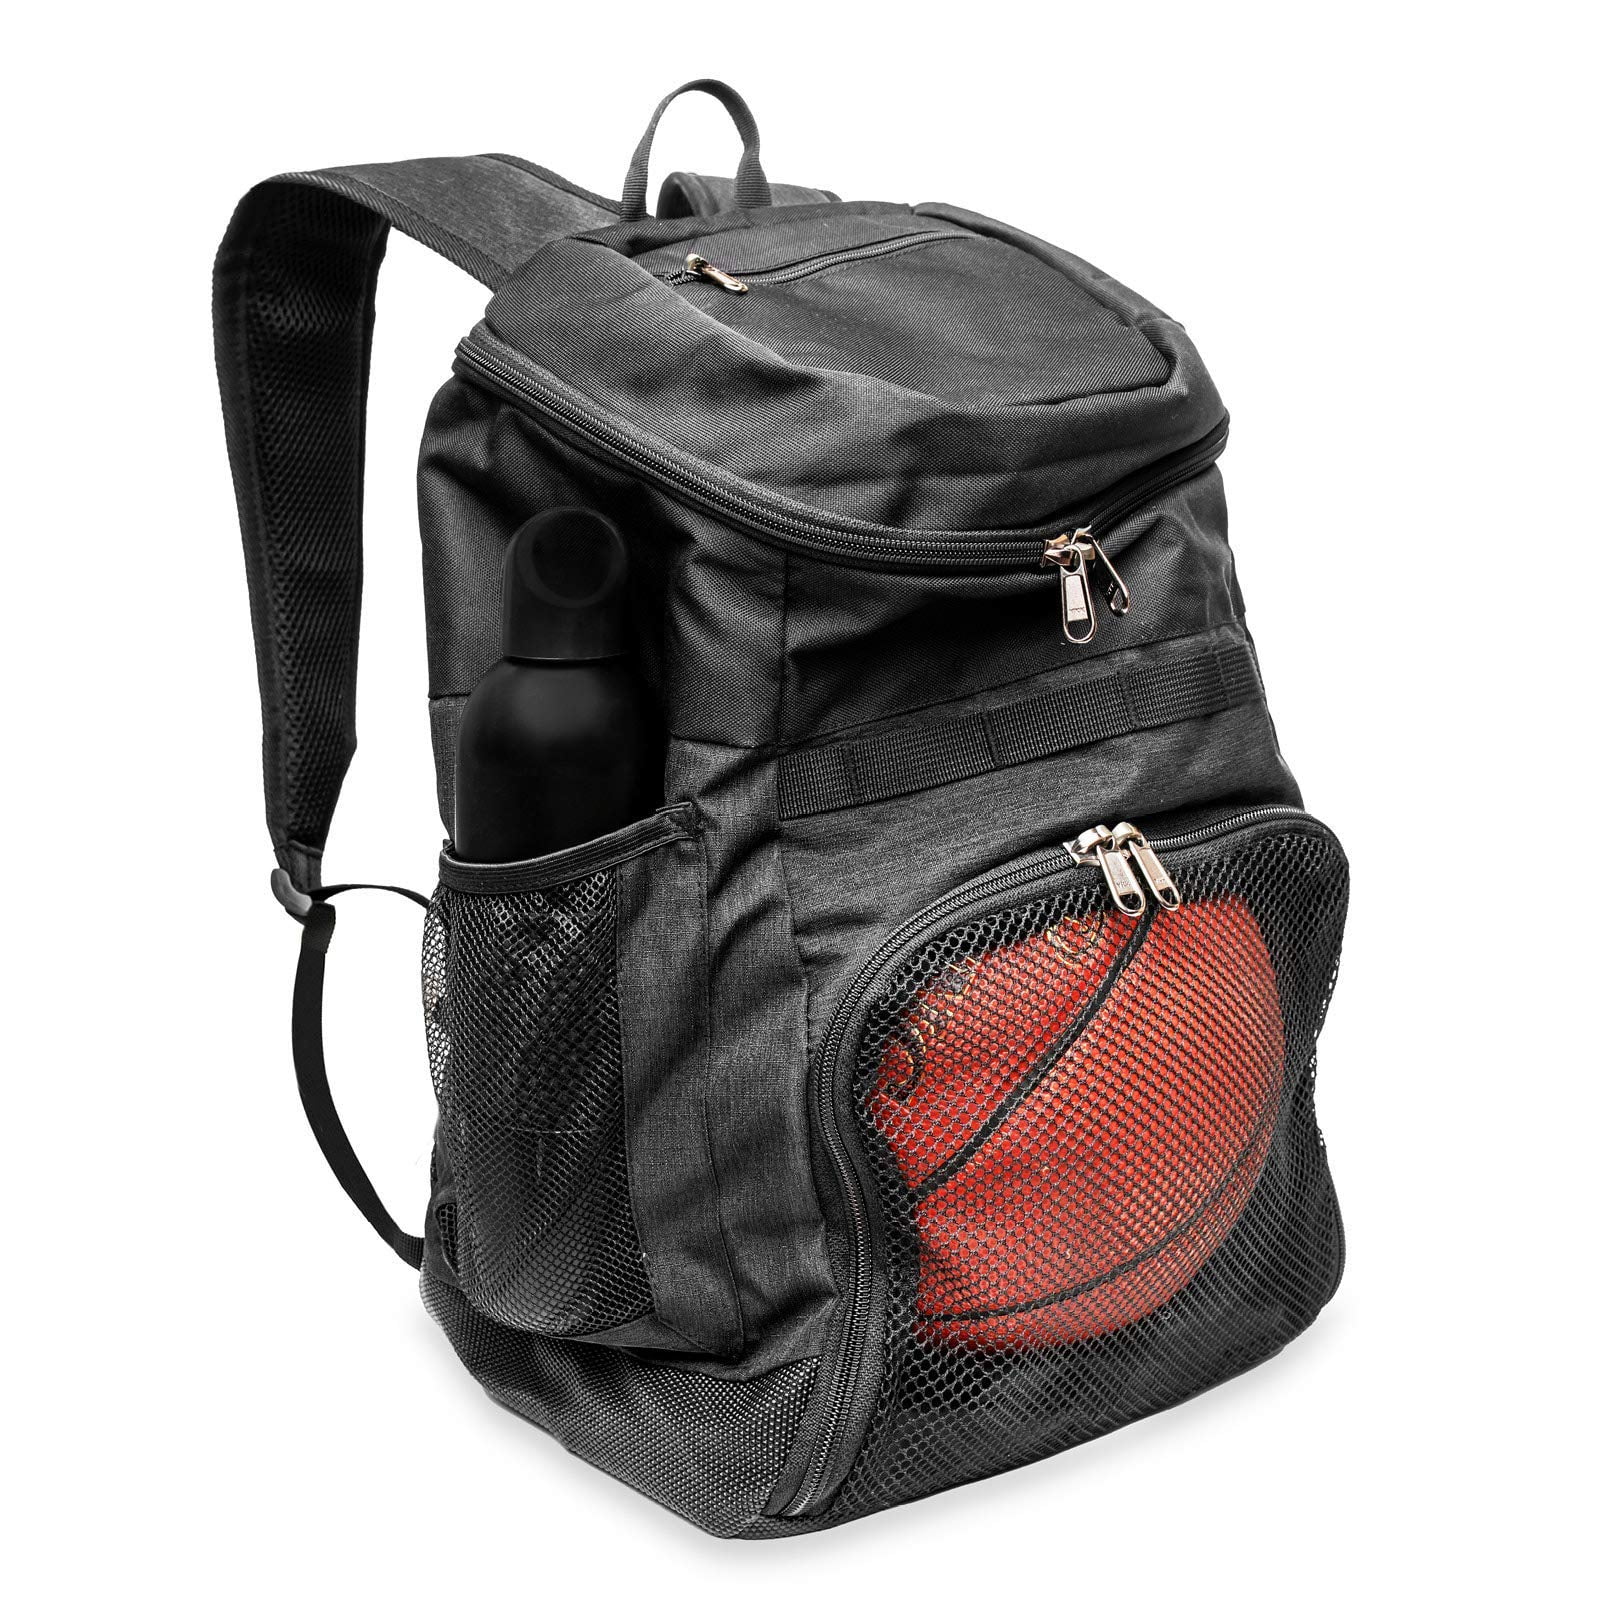 Basketball Backpack Volleyball Soccer Ball Carrier Bag Adjustable Mesh Large Daypack Drawstring Water Resistant Sport Bag Foldable Gym Bag Lightweight Portable Ball Storage Holder for Training 